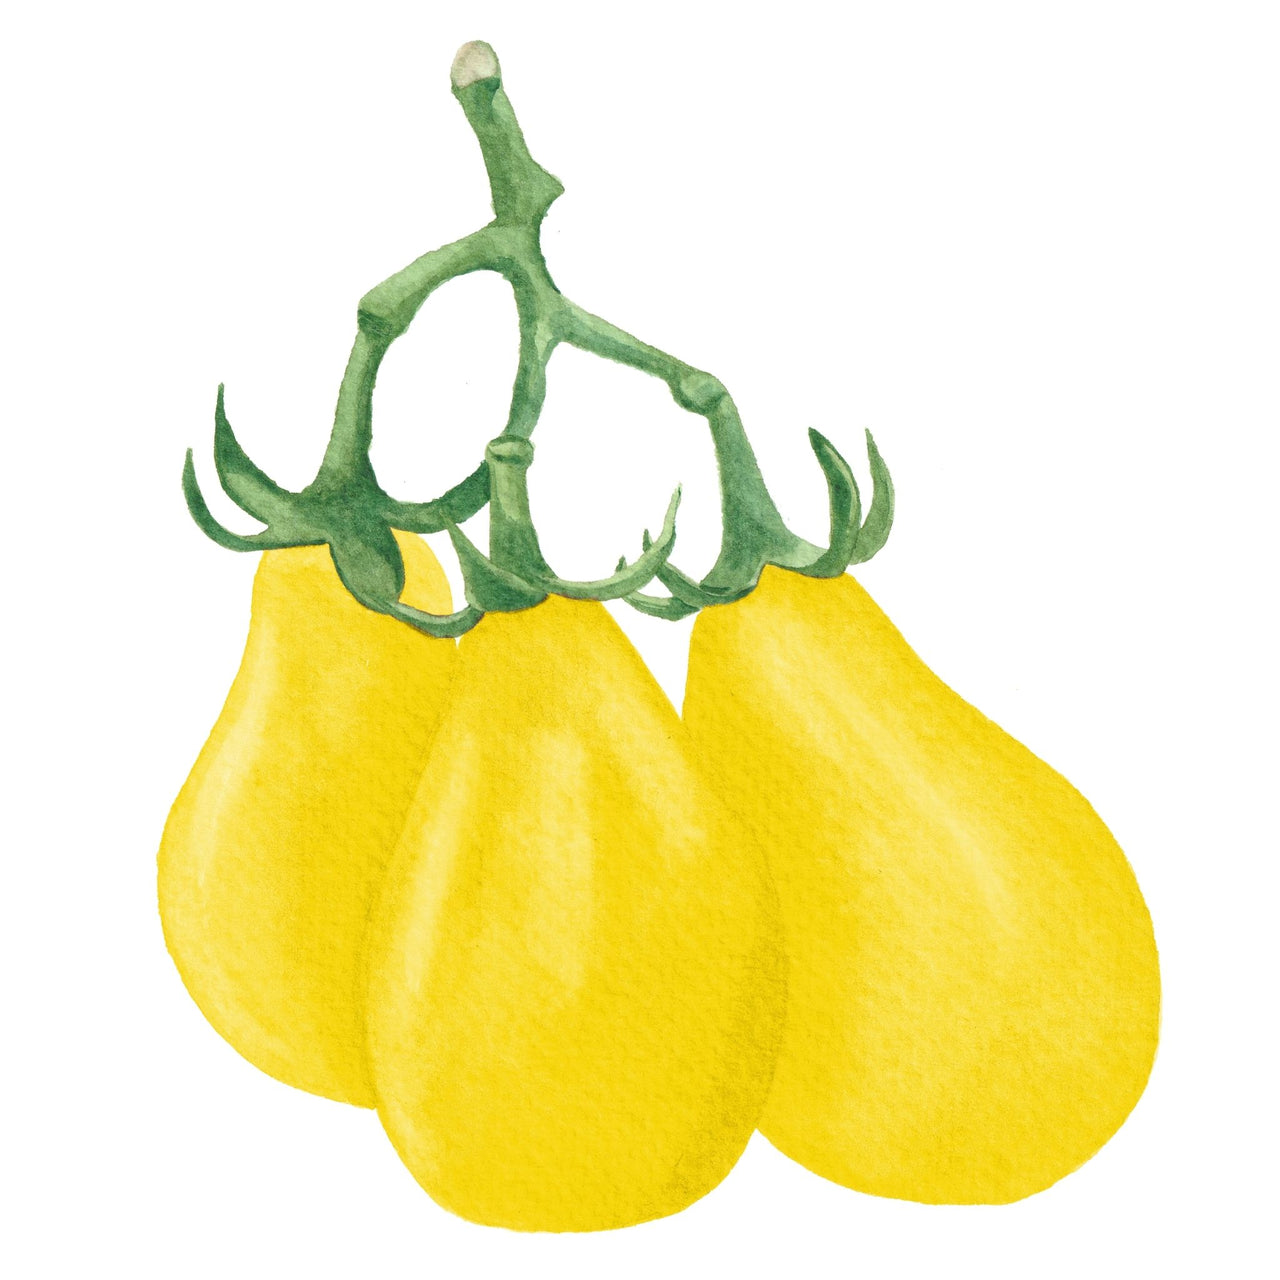 Tomato | Beam's Yellow Pear